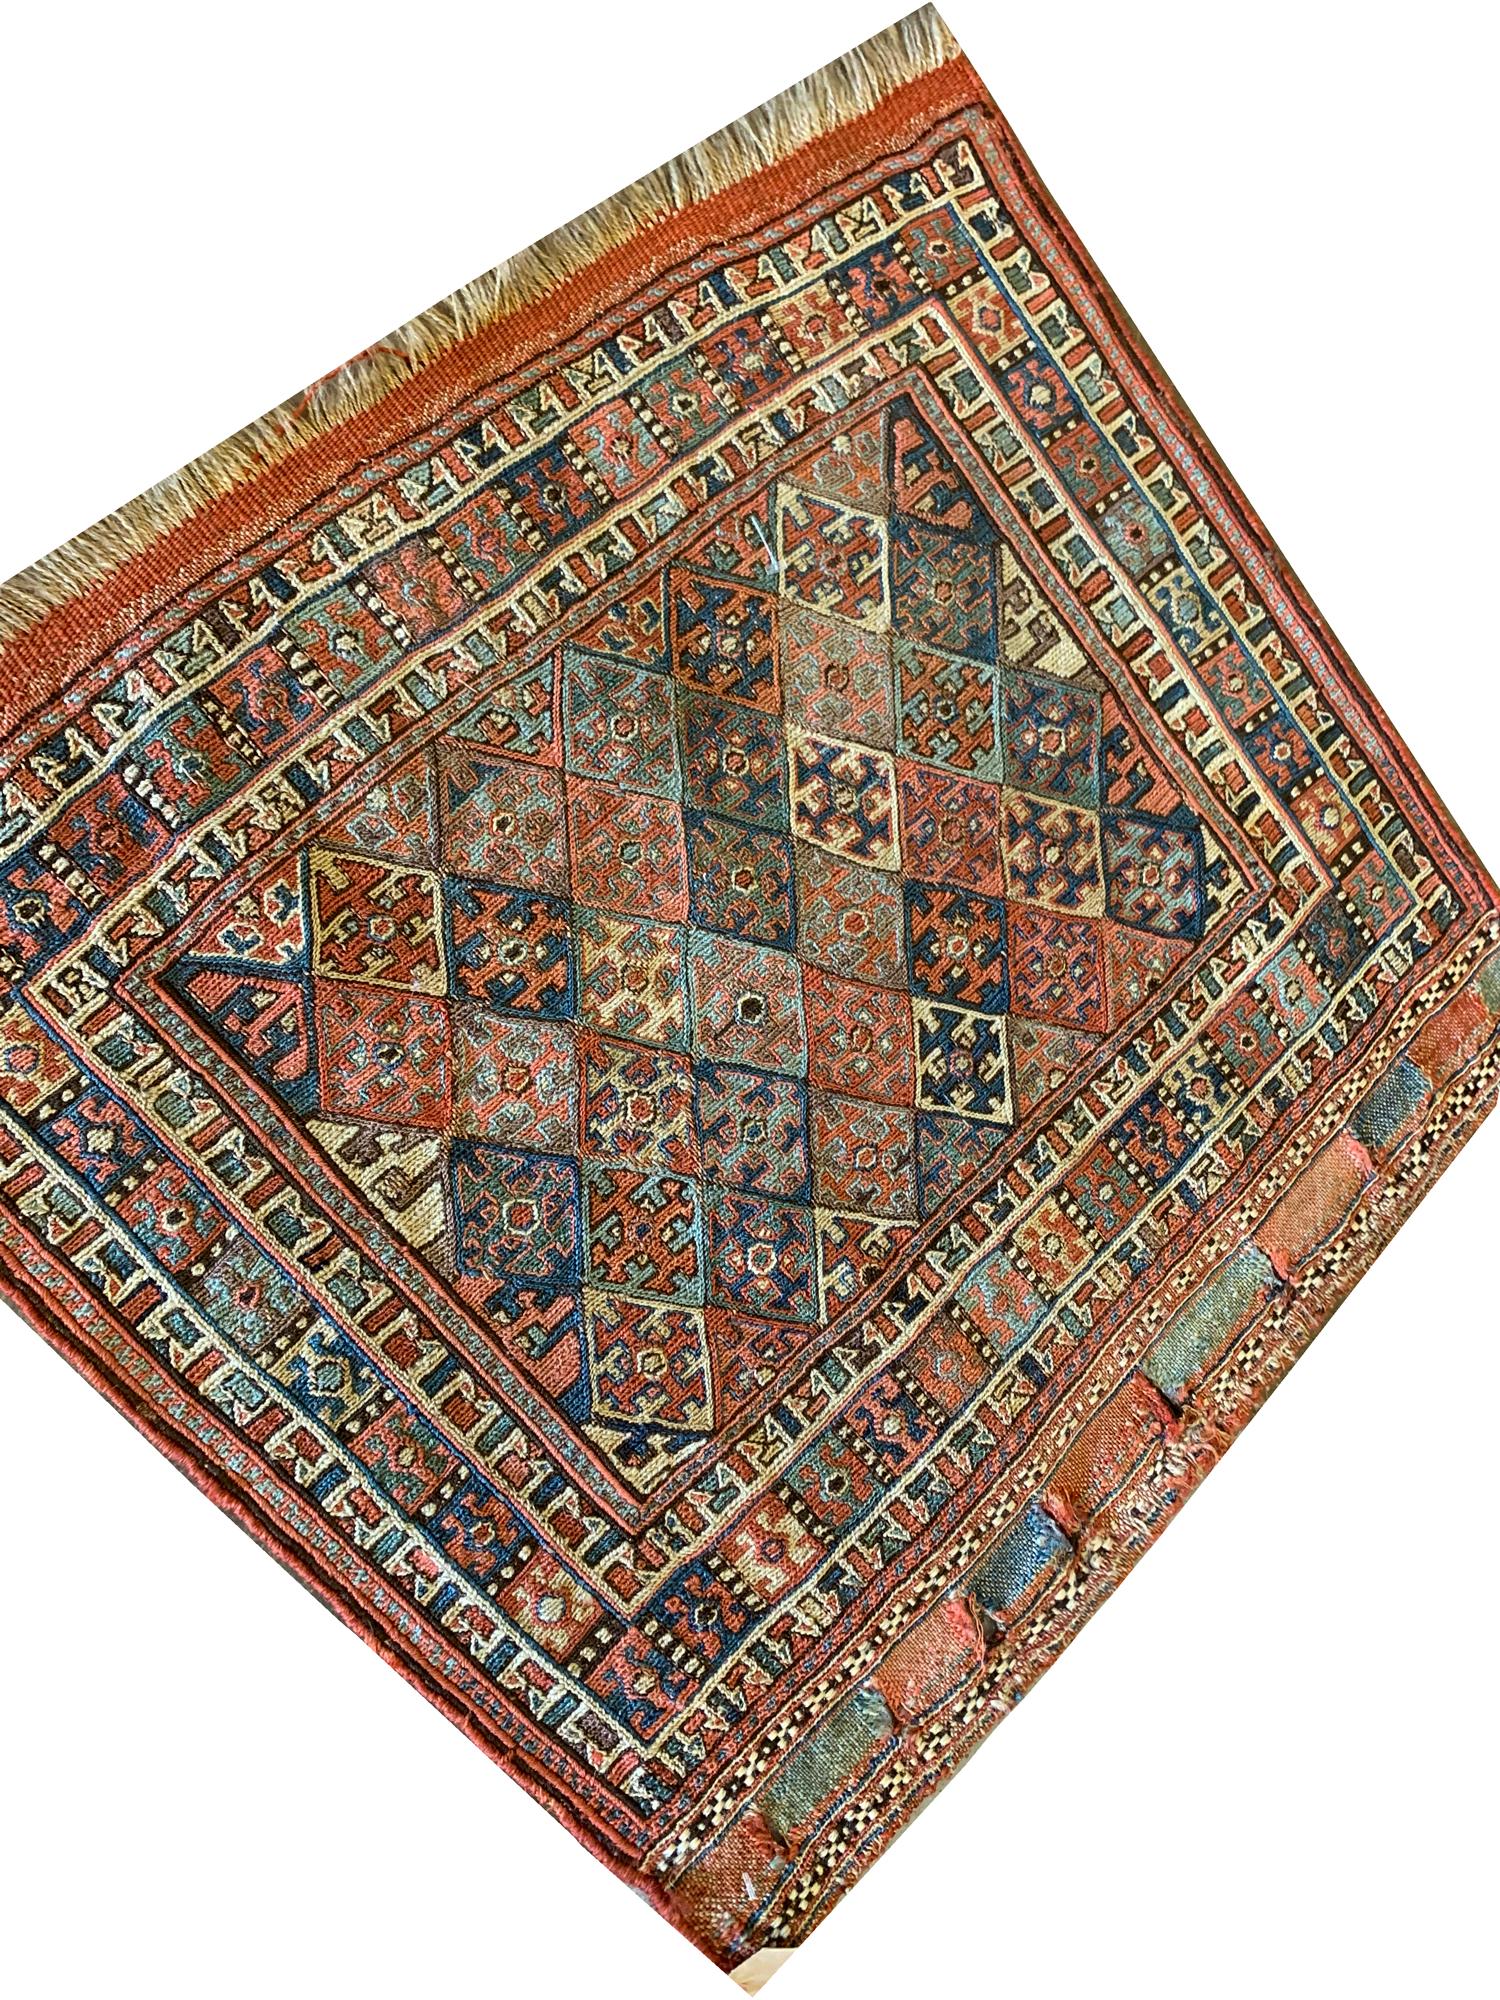 Azerbaijani Handmade Carpet Square Antique Rug, Caucasian Rust Wool Kilims Sumak For Sale